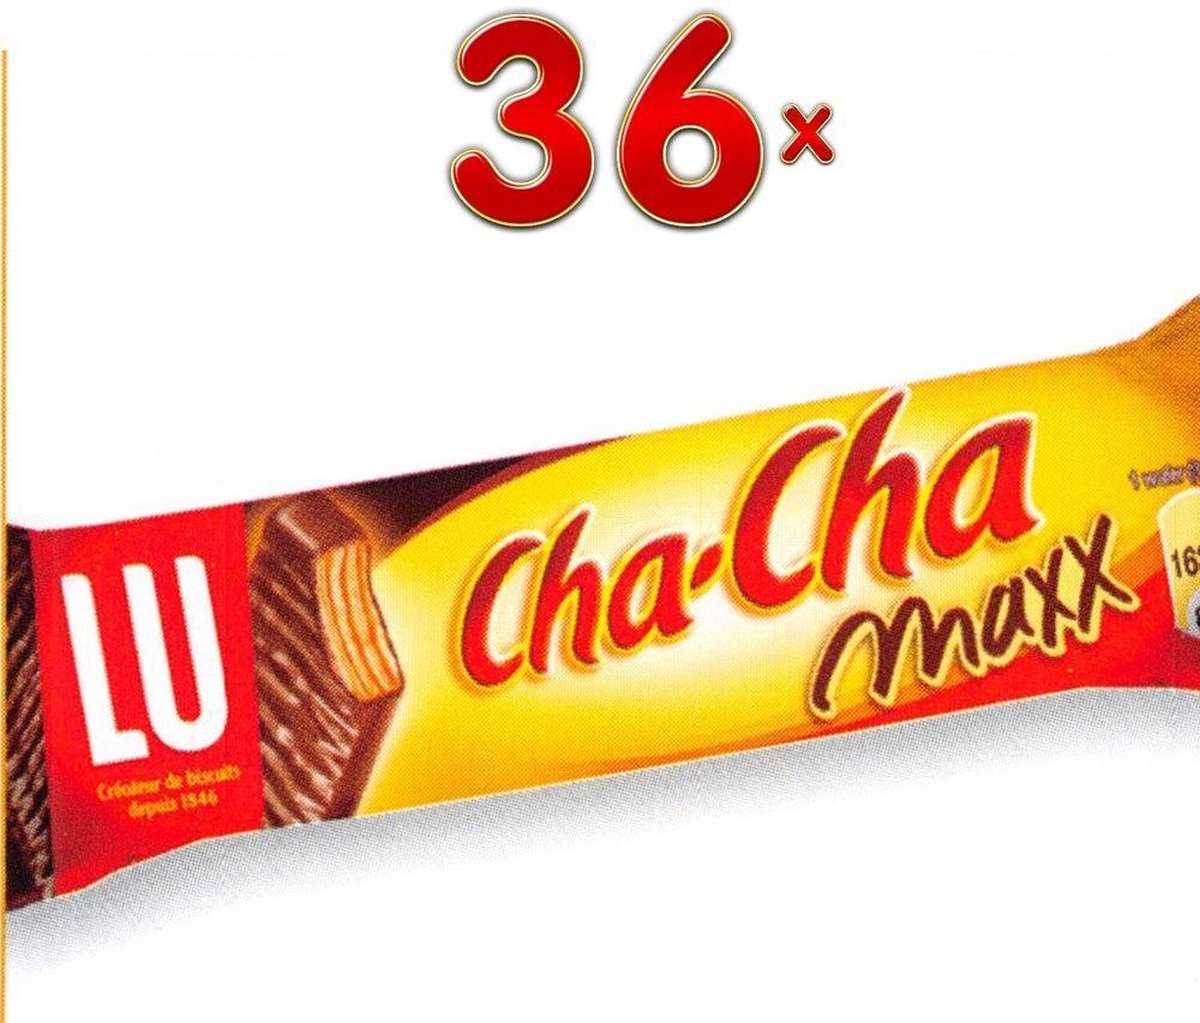 Cha-Cha Maxx e34.3g X 36